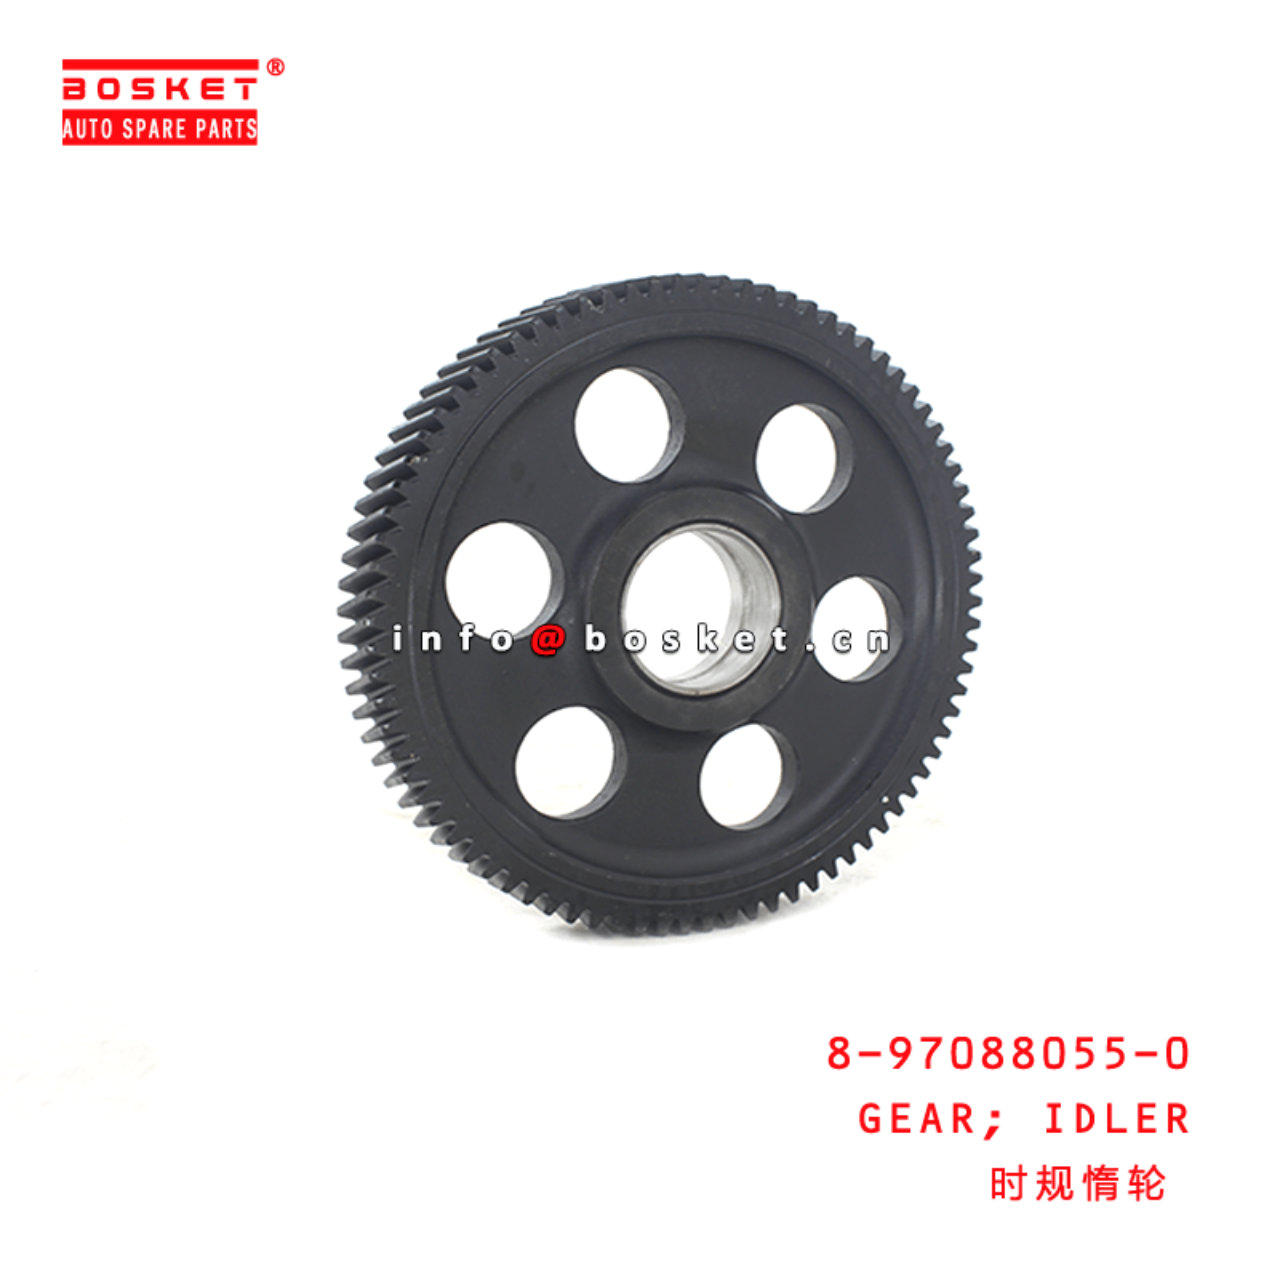  8-97088055-0 Idler Gear 8970880550 Suitable for ISUZU 4HF1 4HG1